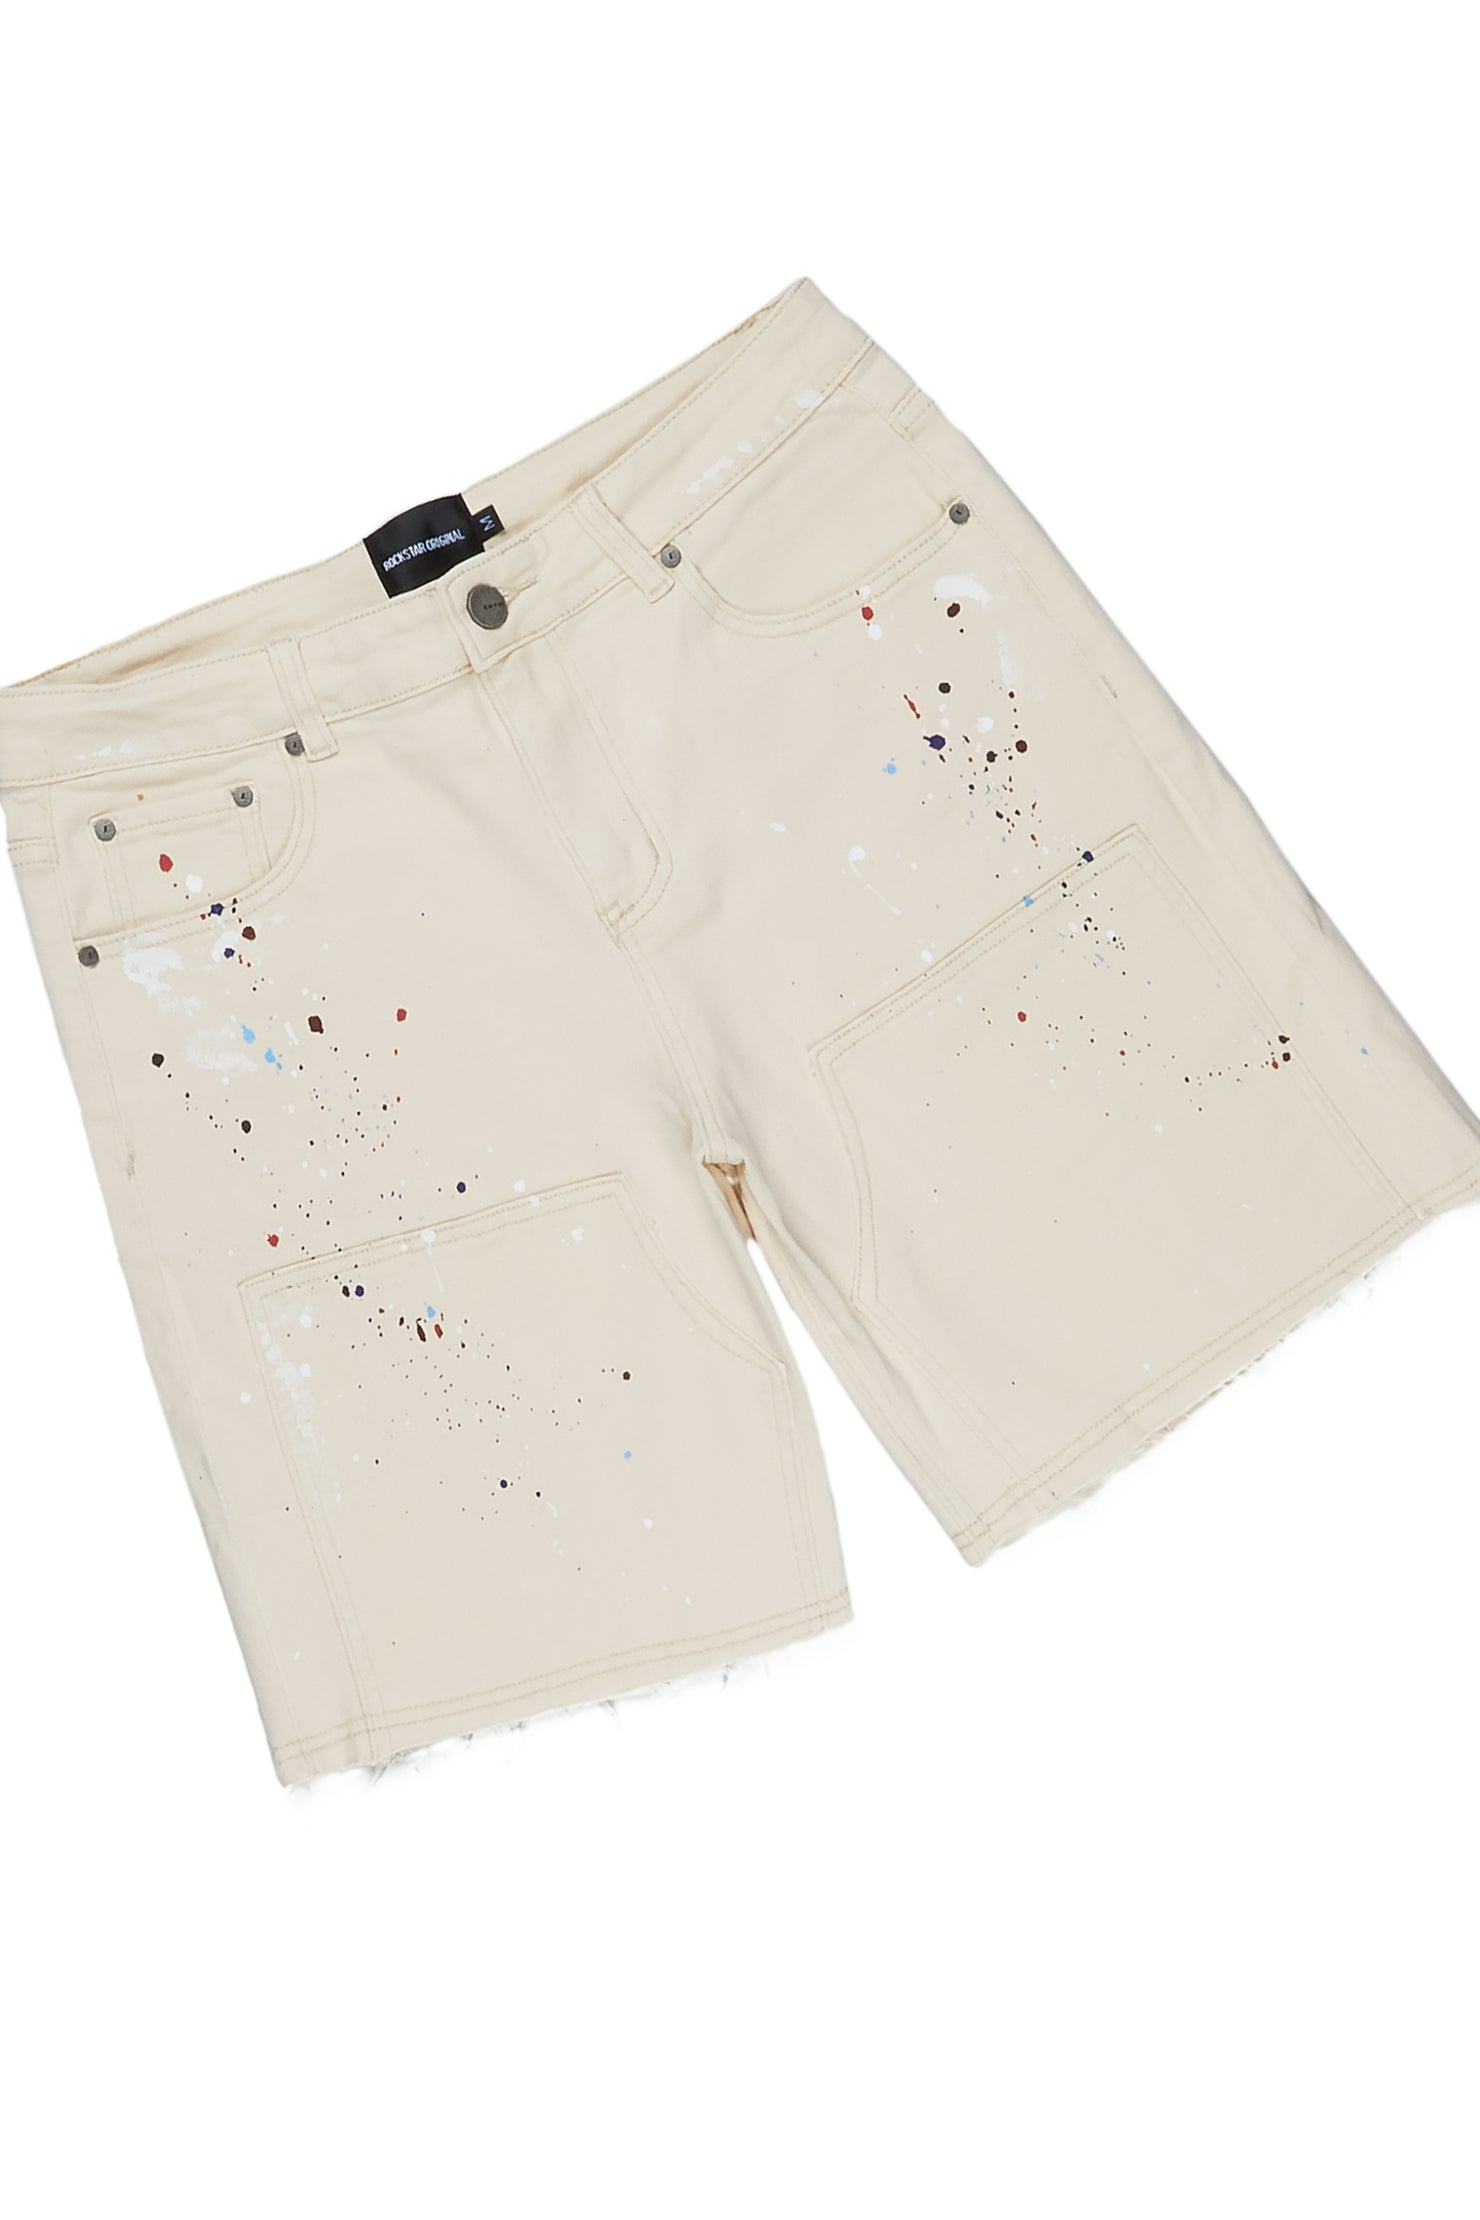 Skorps White/Cream T-Shirt Short Set